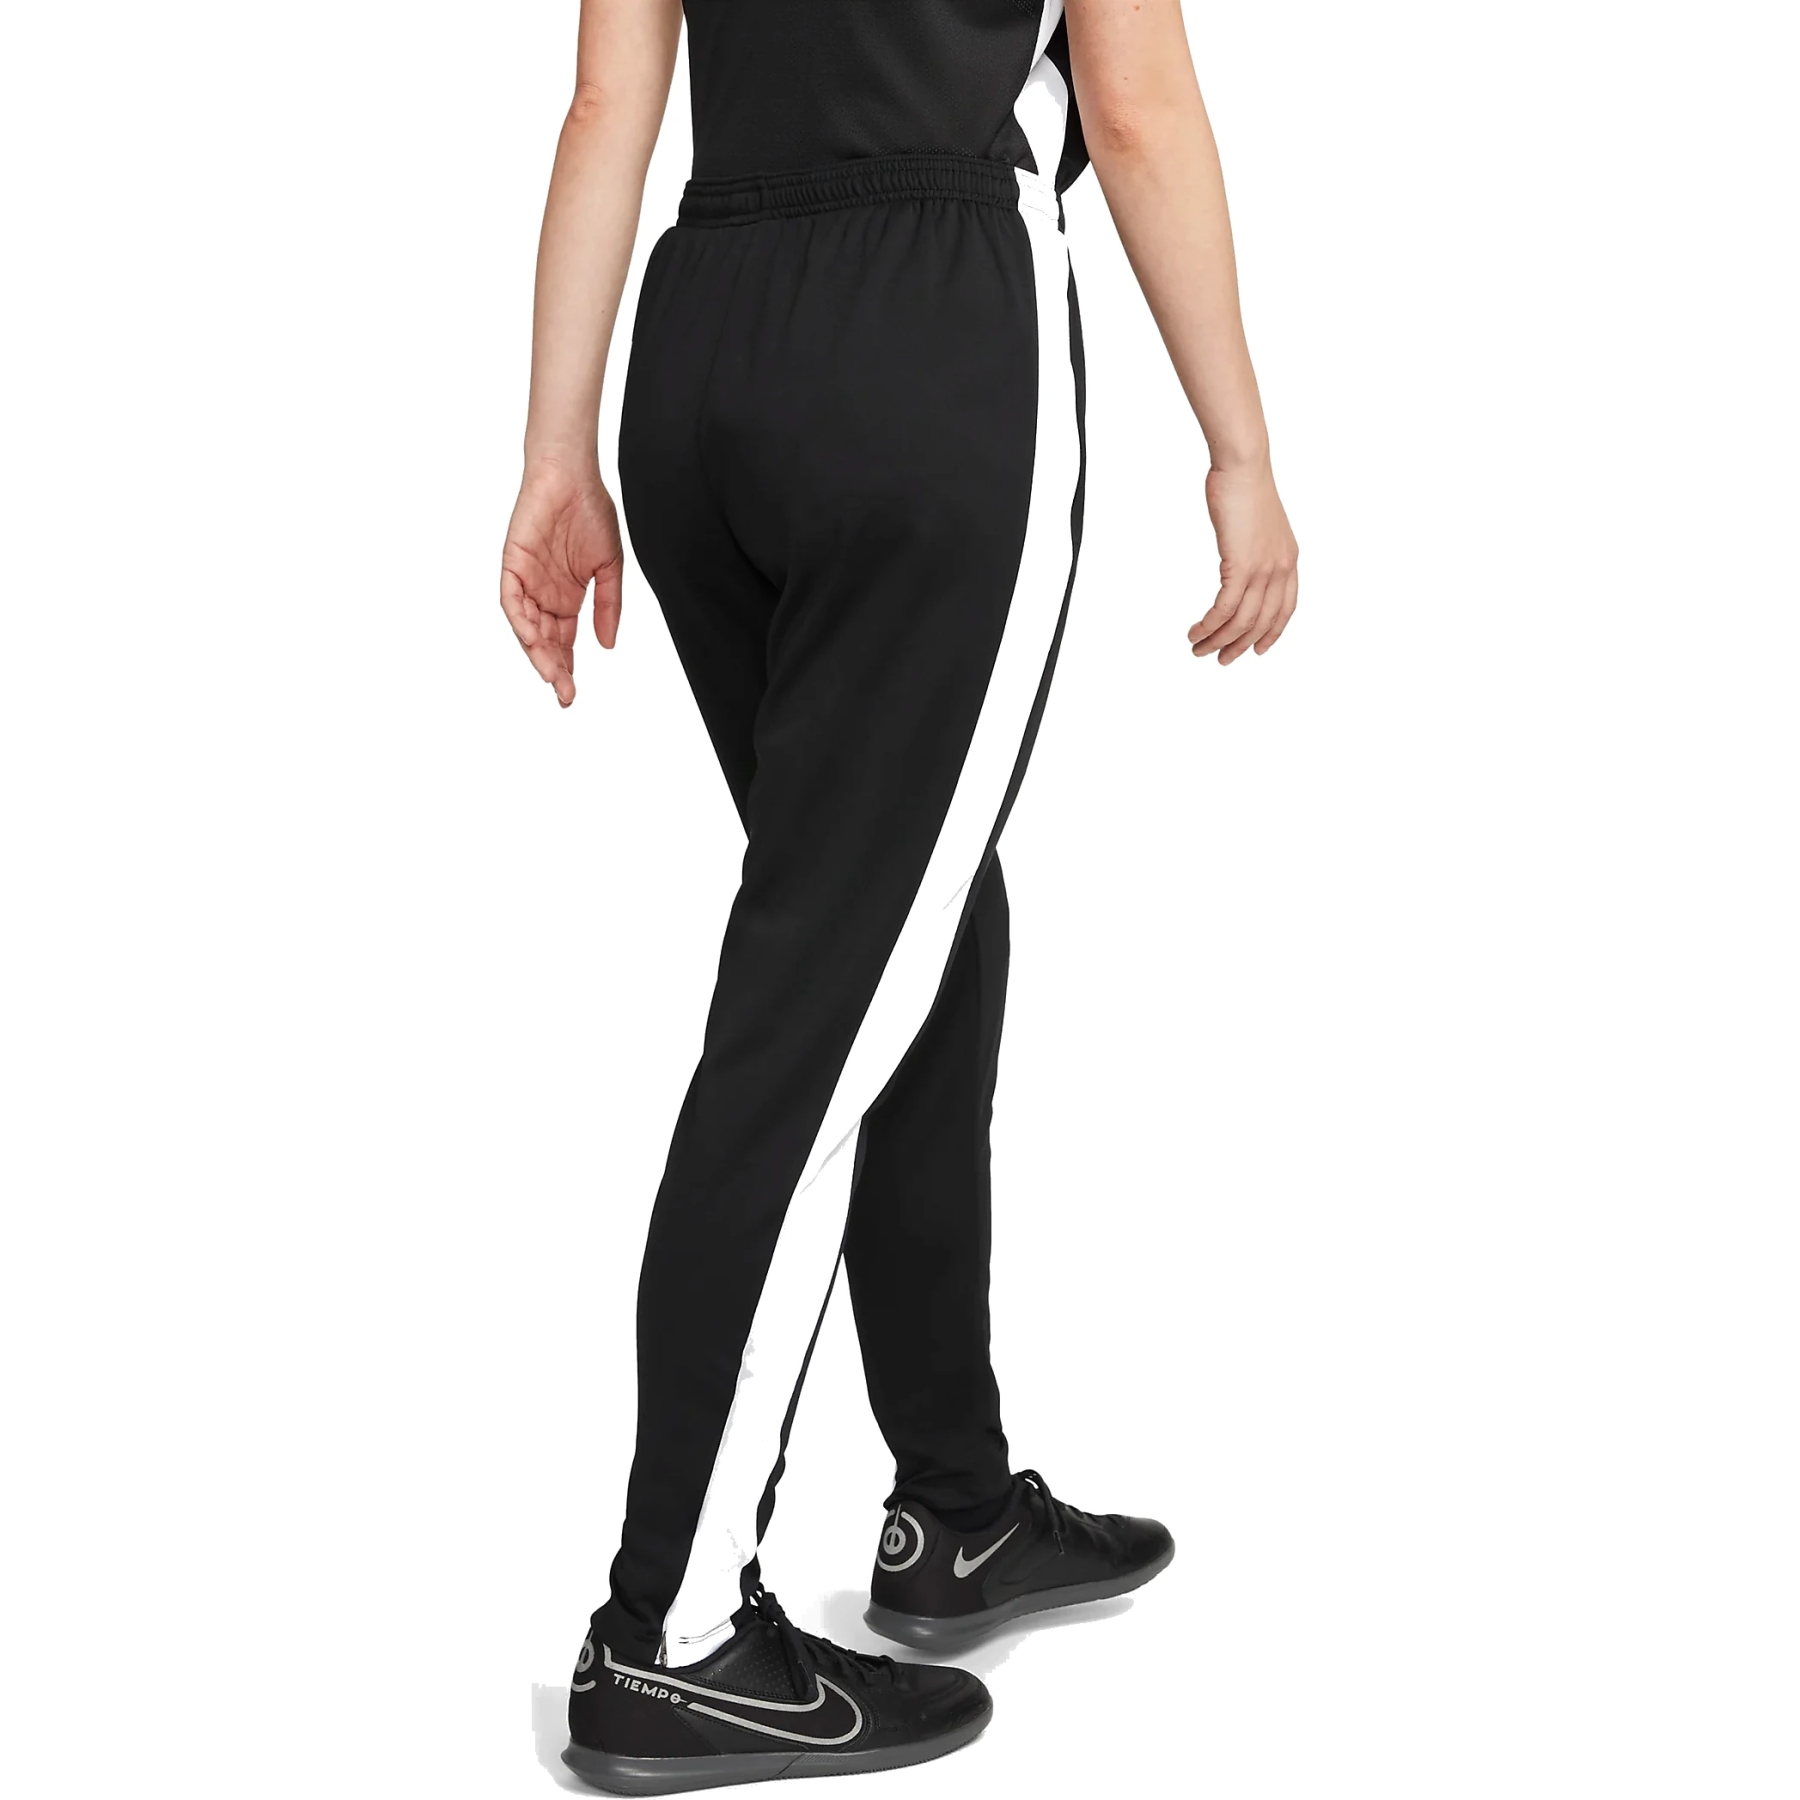  Nike Dri-FIT Get Fit Women's Training Pants (Medium,  Black/White) : Sports & Outdoors